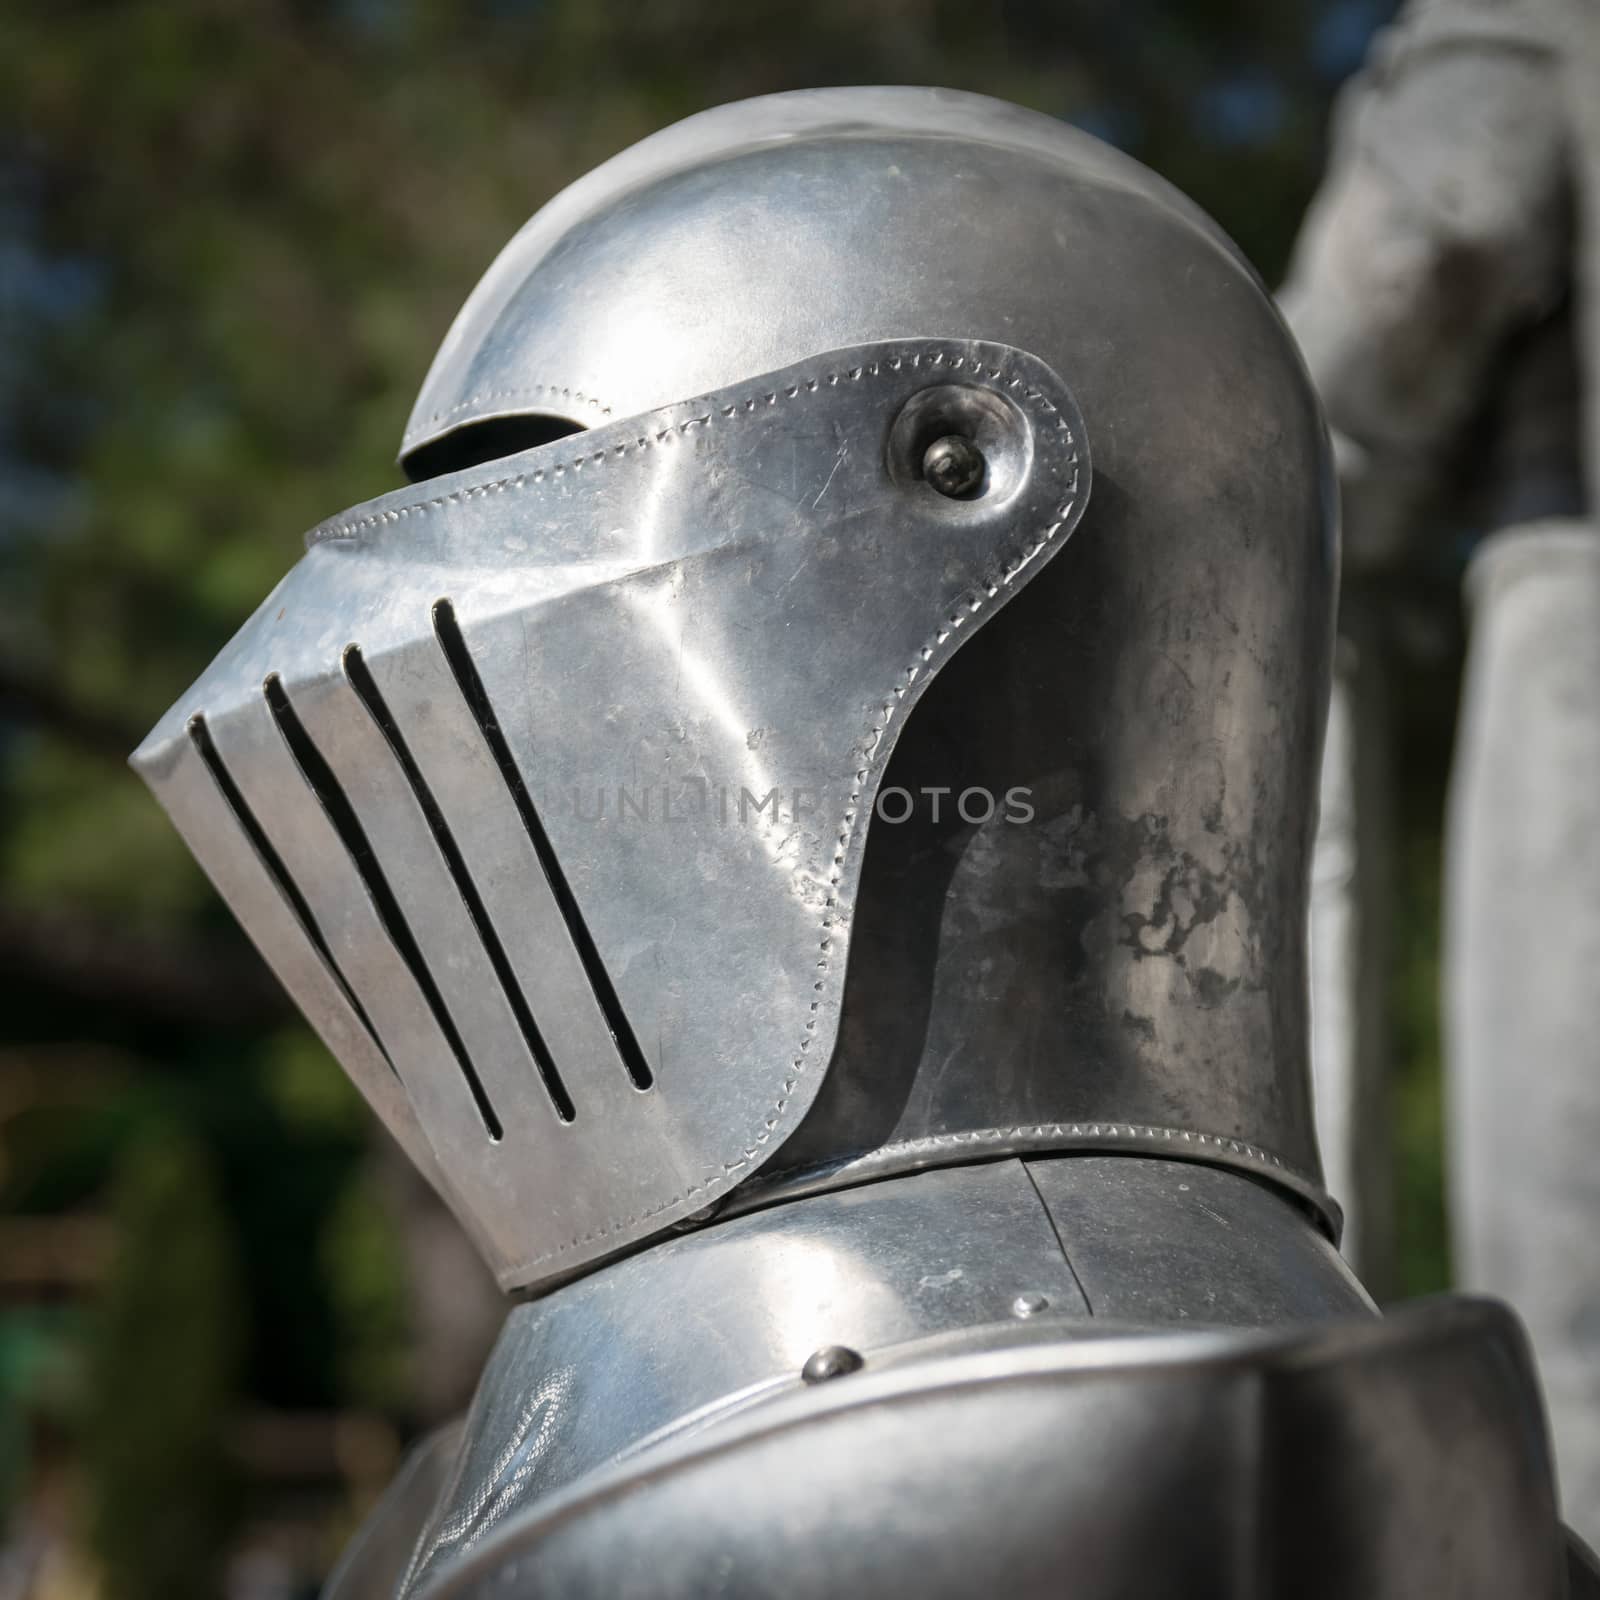 Helmet detail of medieval armor. by Isaac74